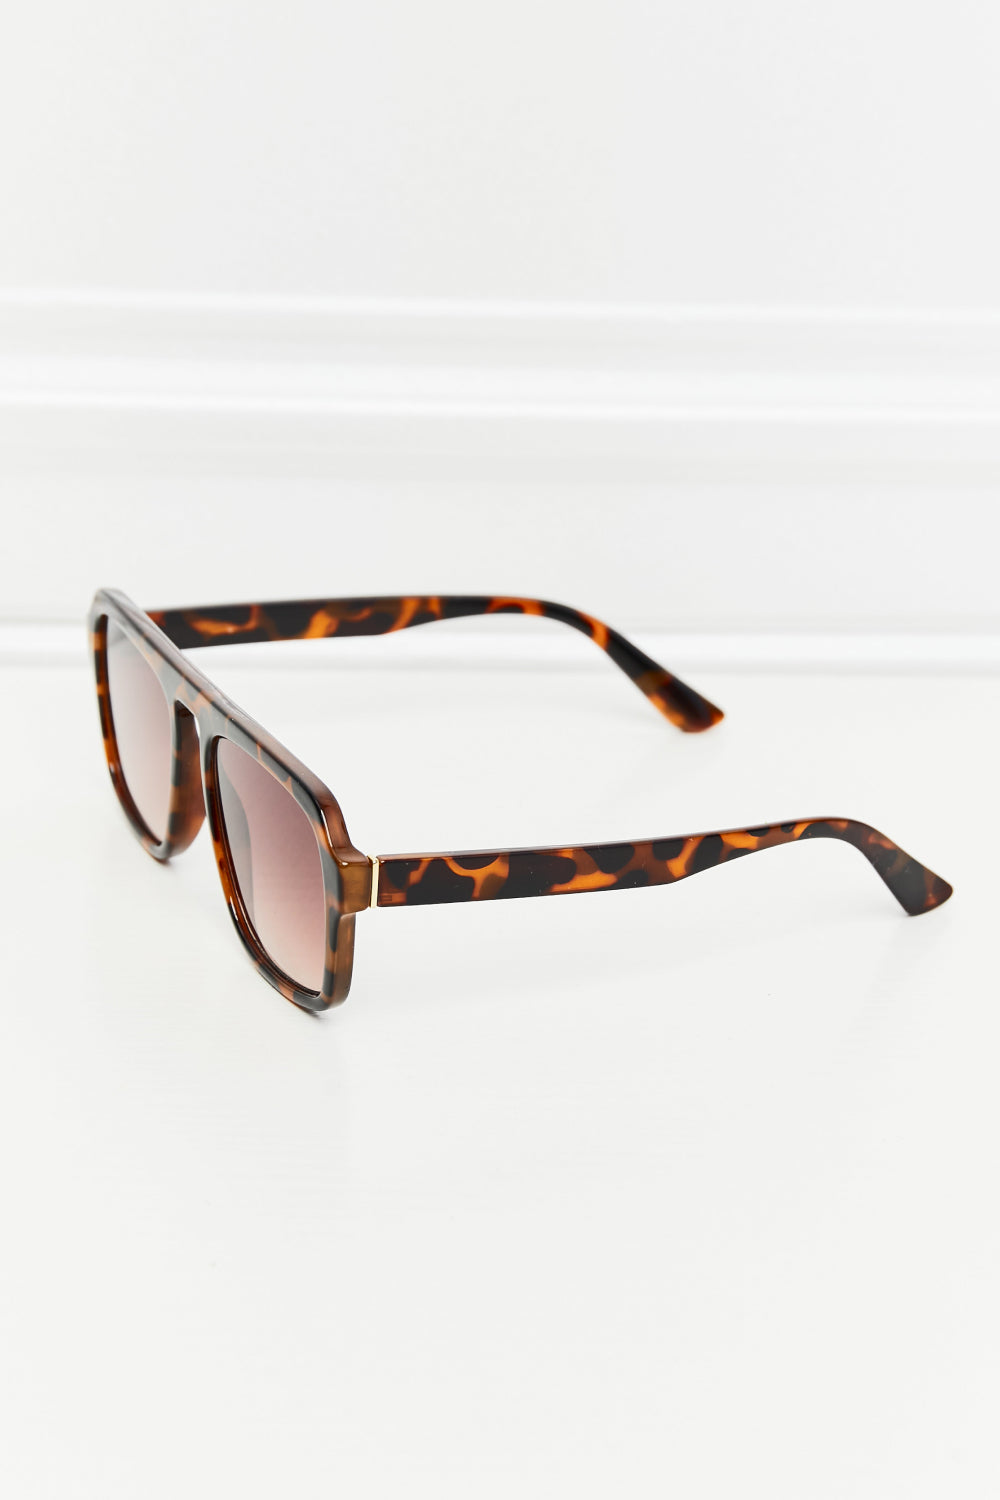 Tortoiseshell Square Polycarbonate Frame Sunglasses - The Fashion Unicorn